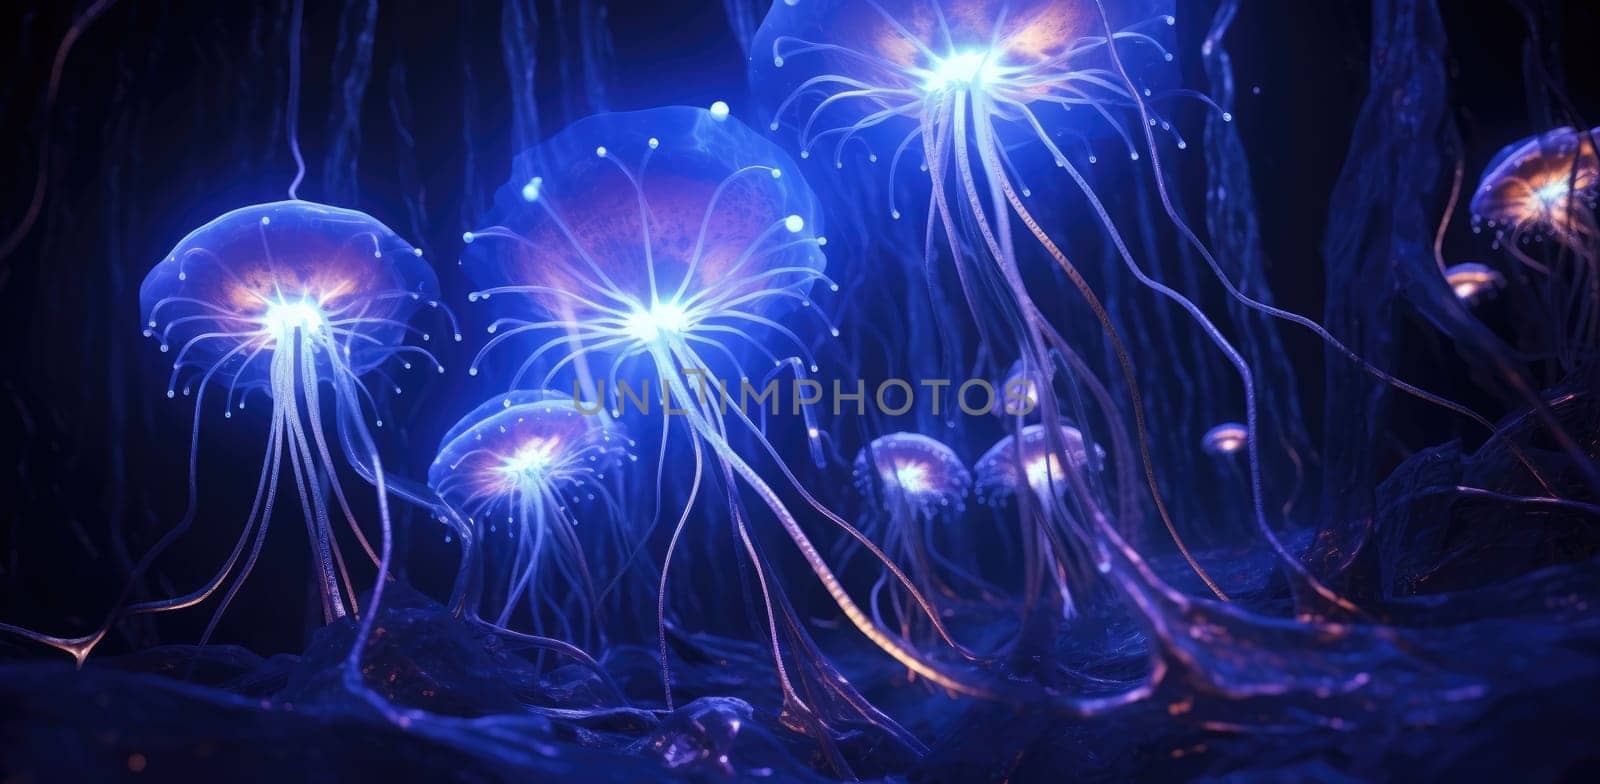 Transparent mushrooms or jellyfish by cherezoff